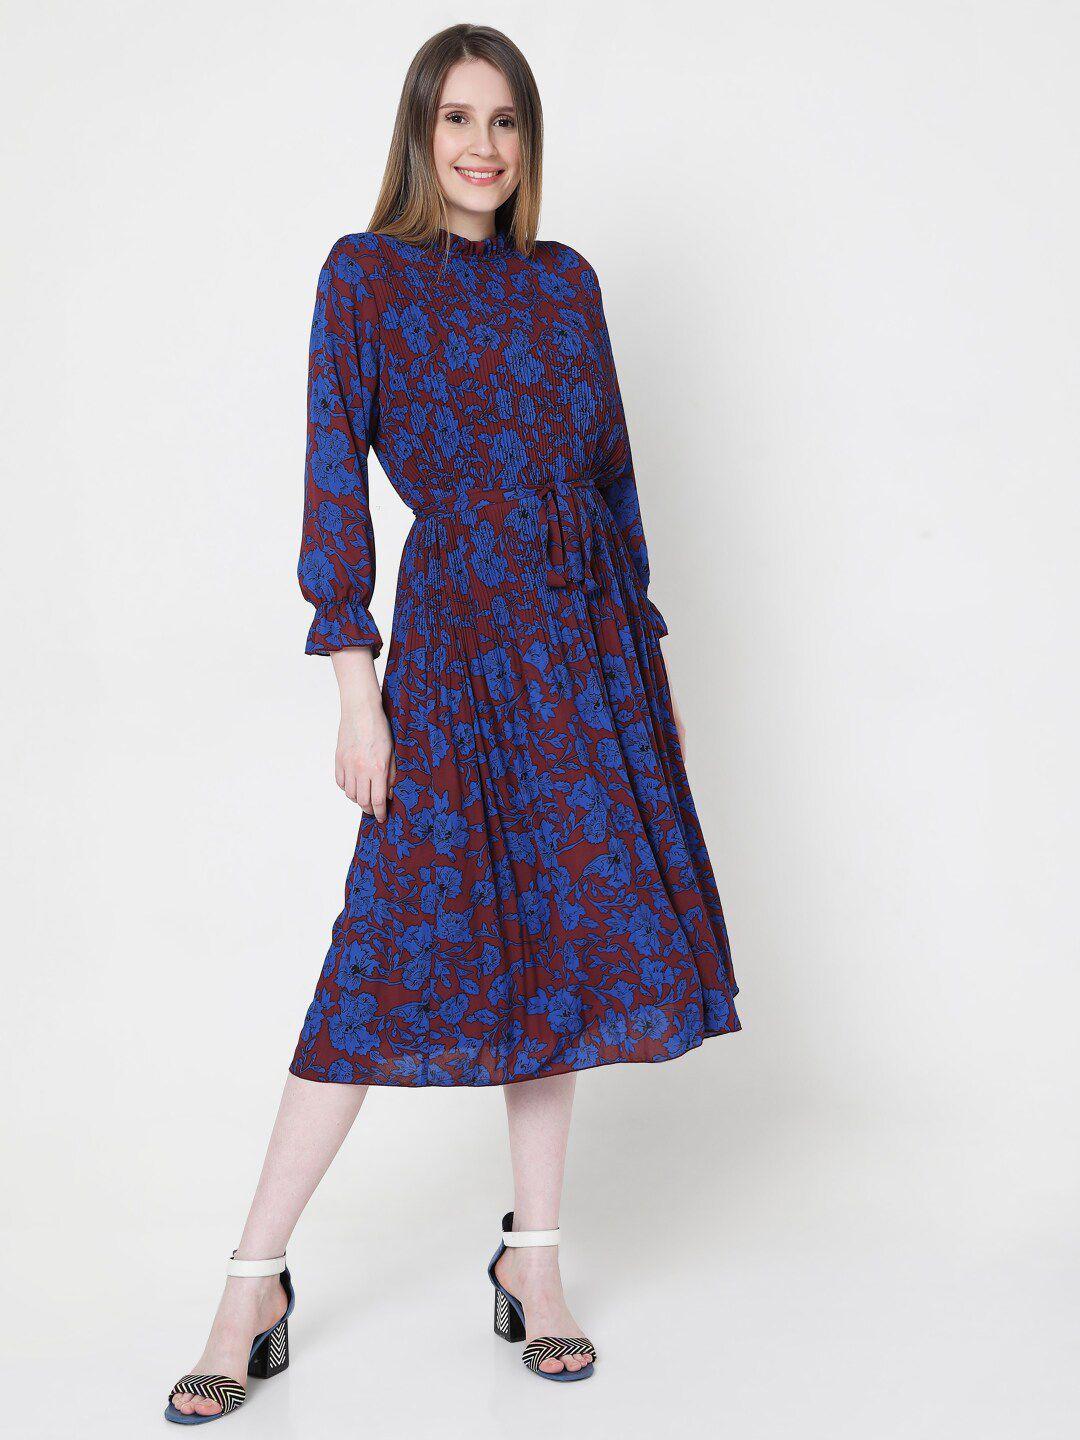 vero moda blue & maroon floral printed bell sleeves midi dress